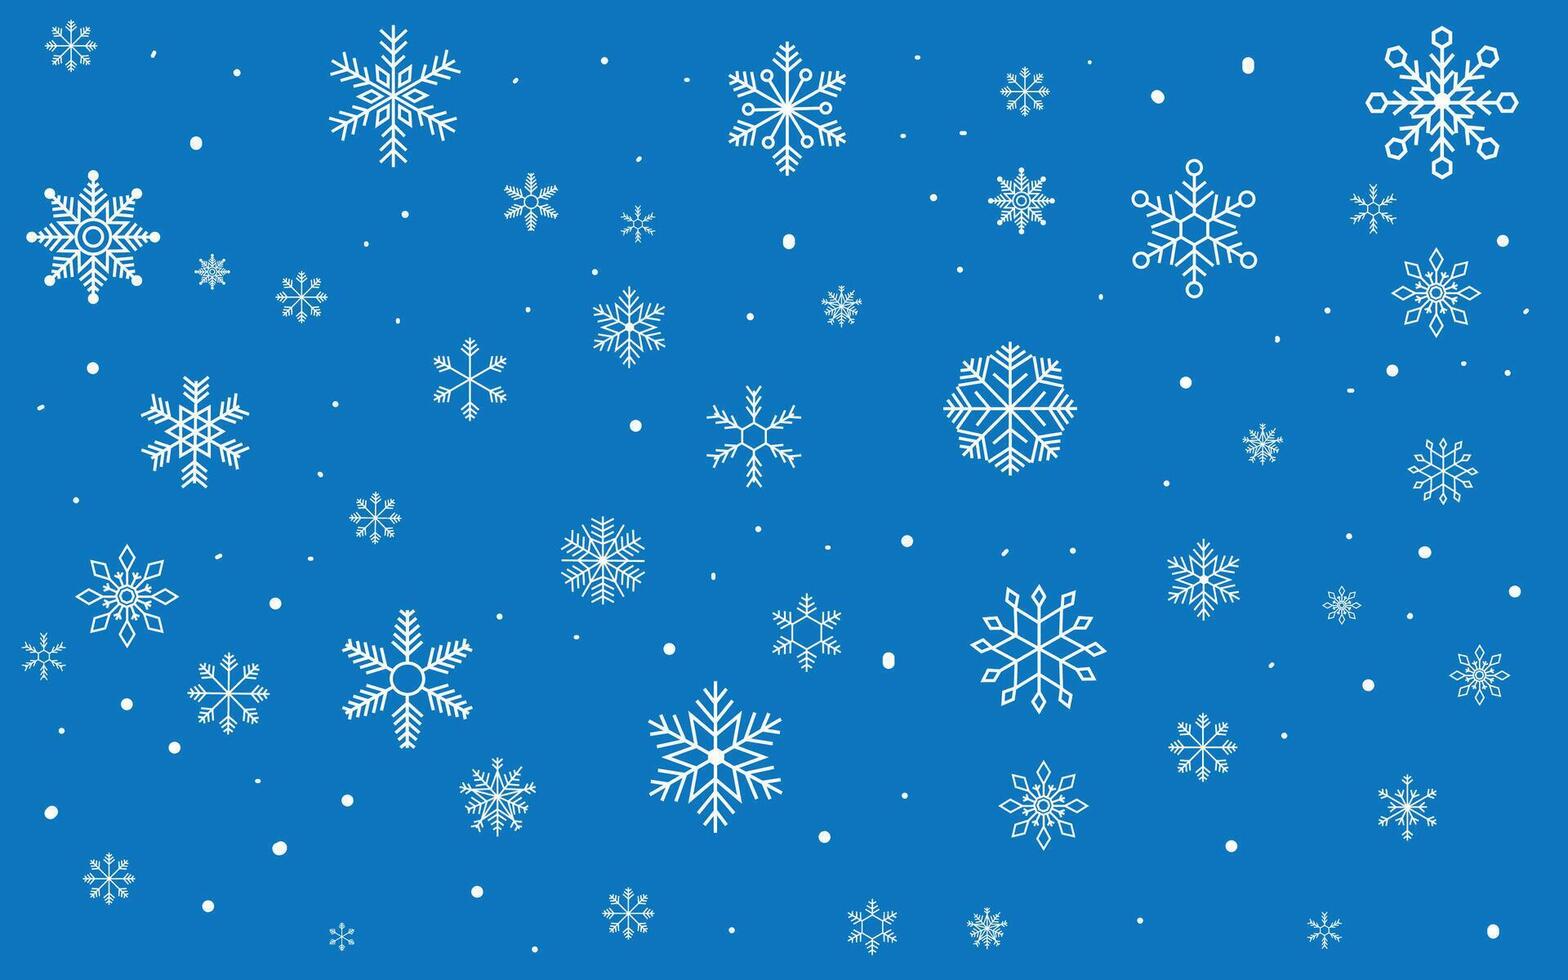 Falling snowflakes. Winter snow dust holiday decorative elements, seasonal sky snowfall snowstorm frozen weather symbols. Vector background